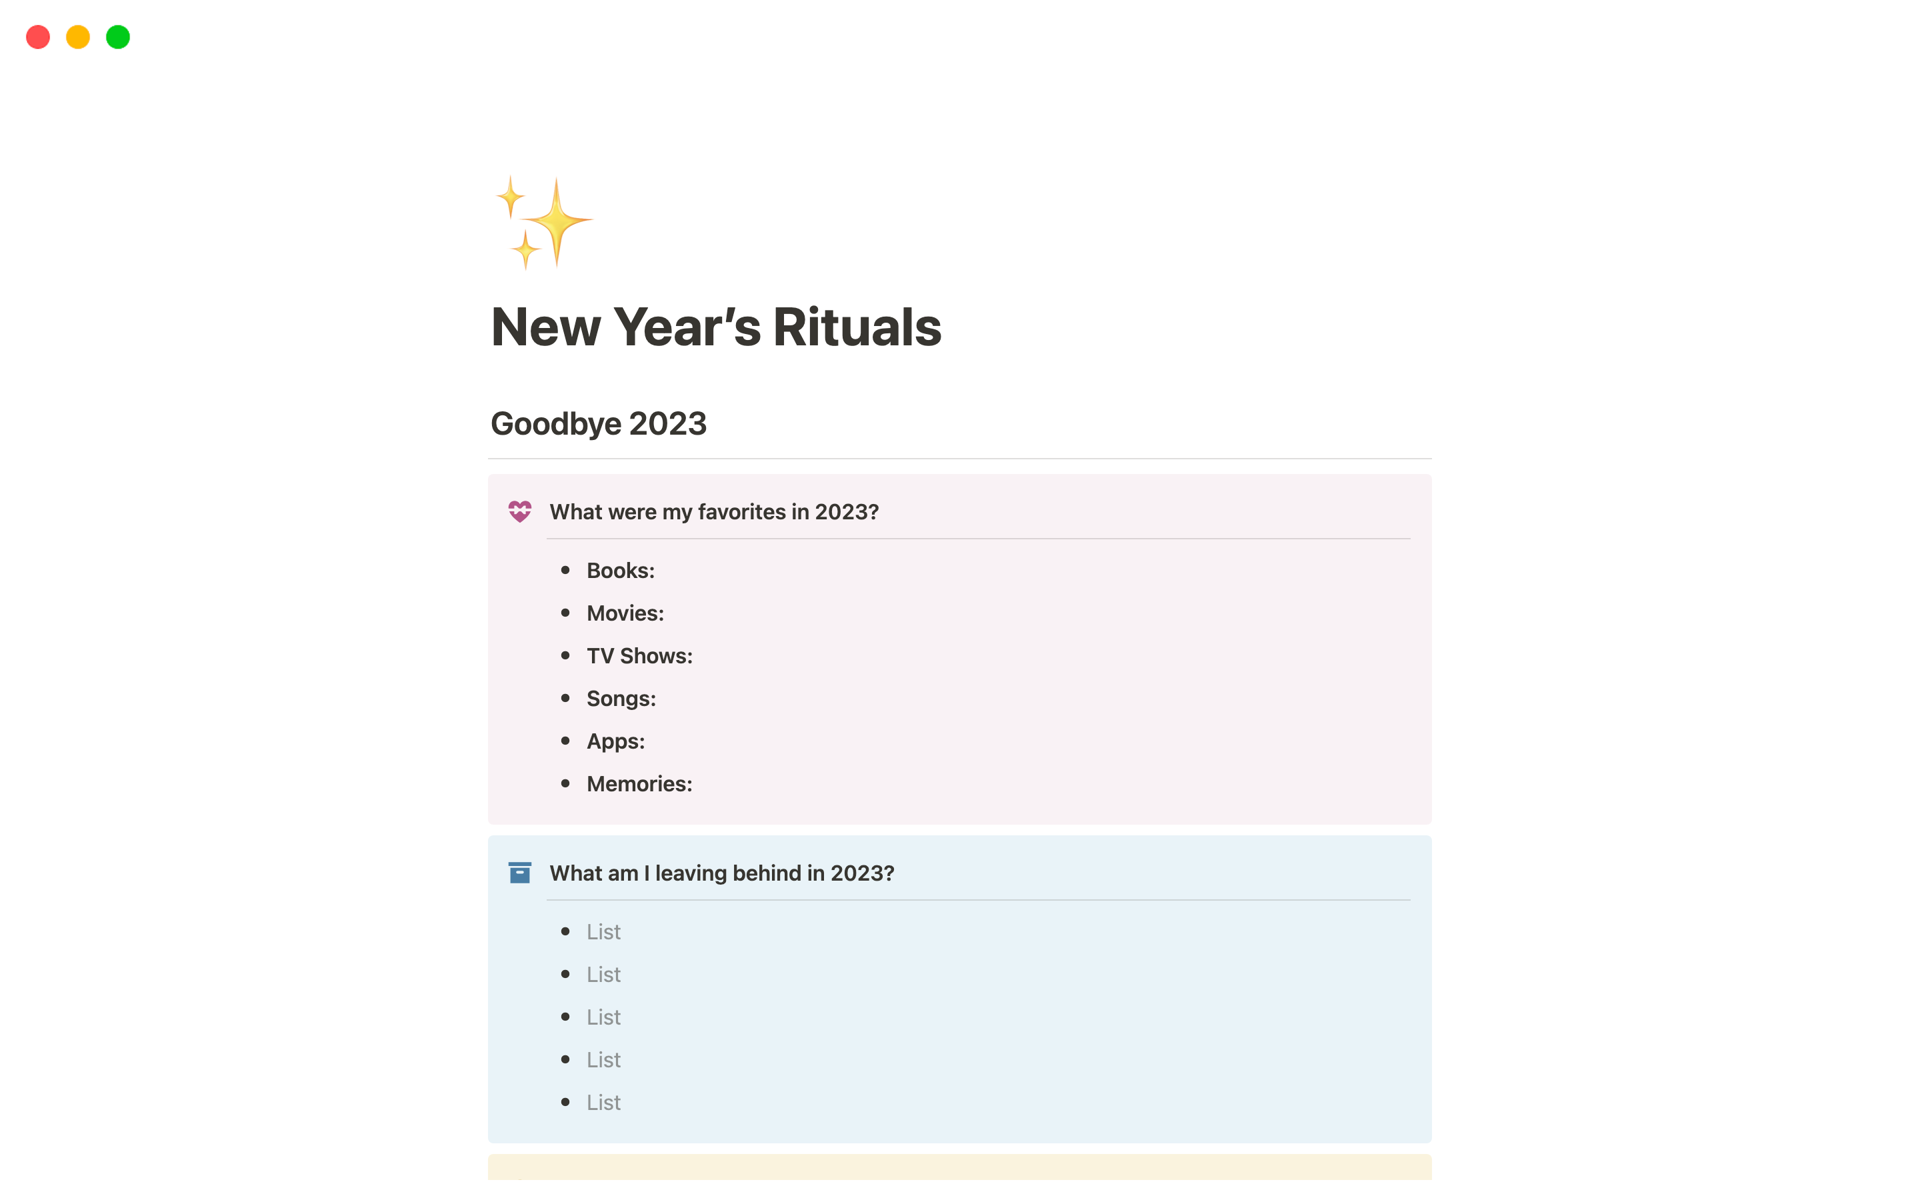 Vista previa de plantilla para New Year’s Rituals